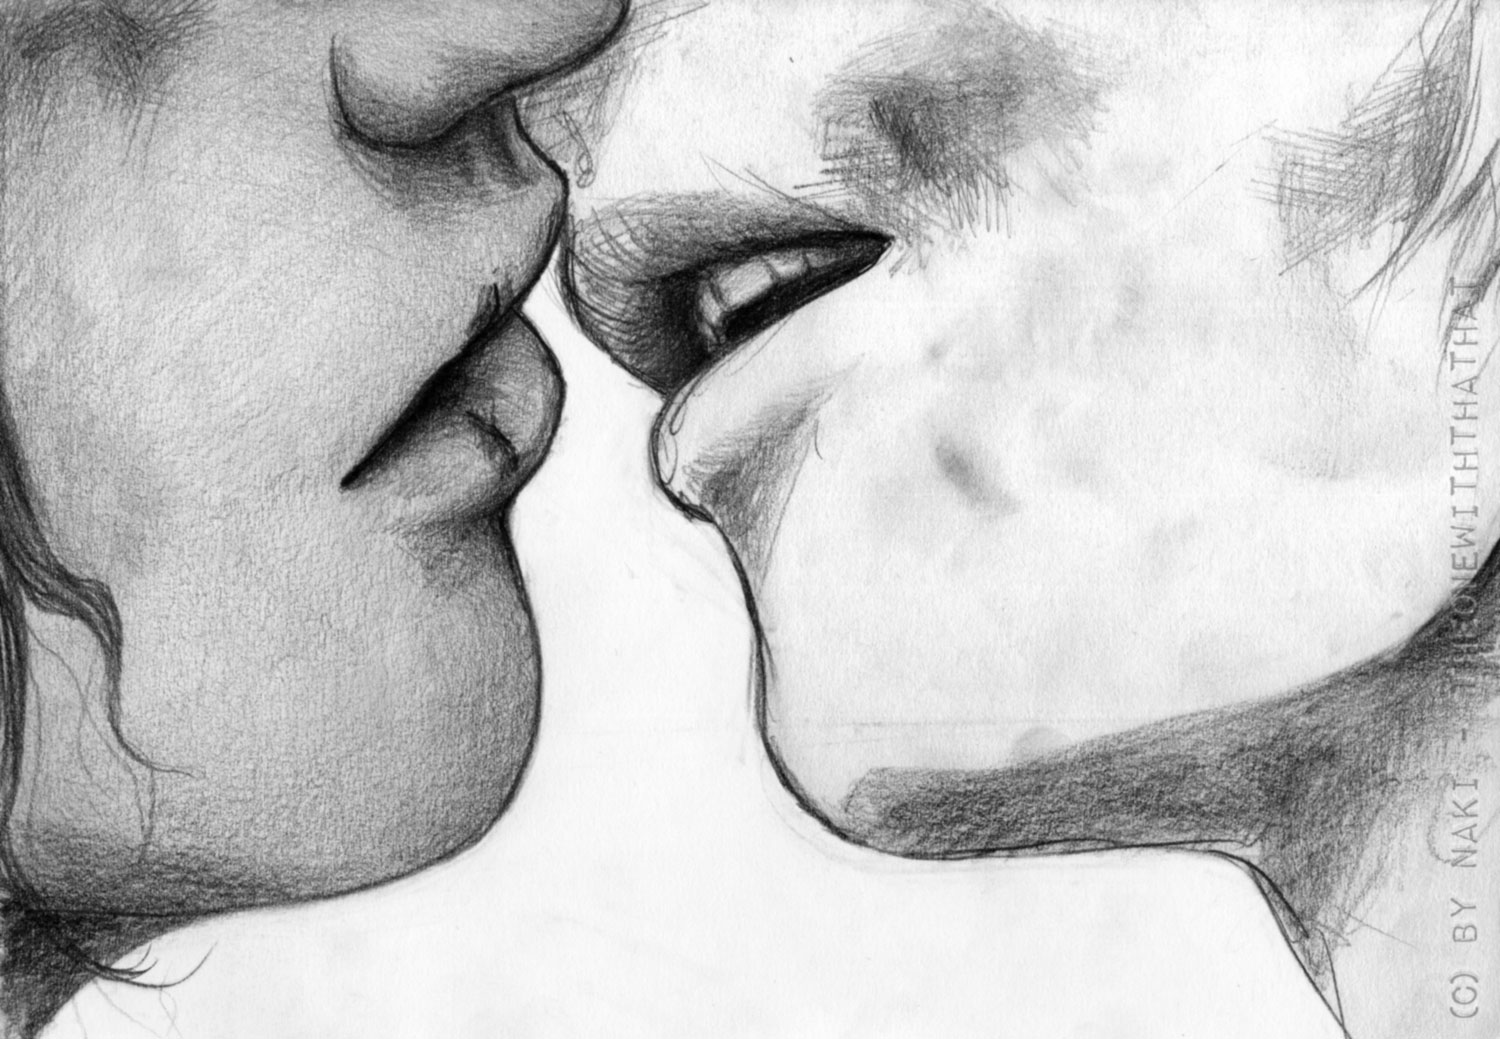 Drawing Skill Kissing Cheek Drawing Reference Lovethispic offers lip drawin...